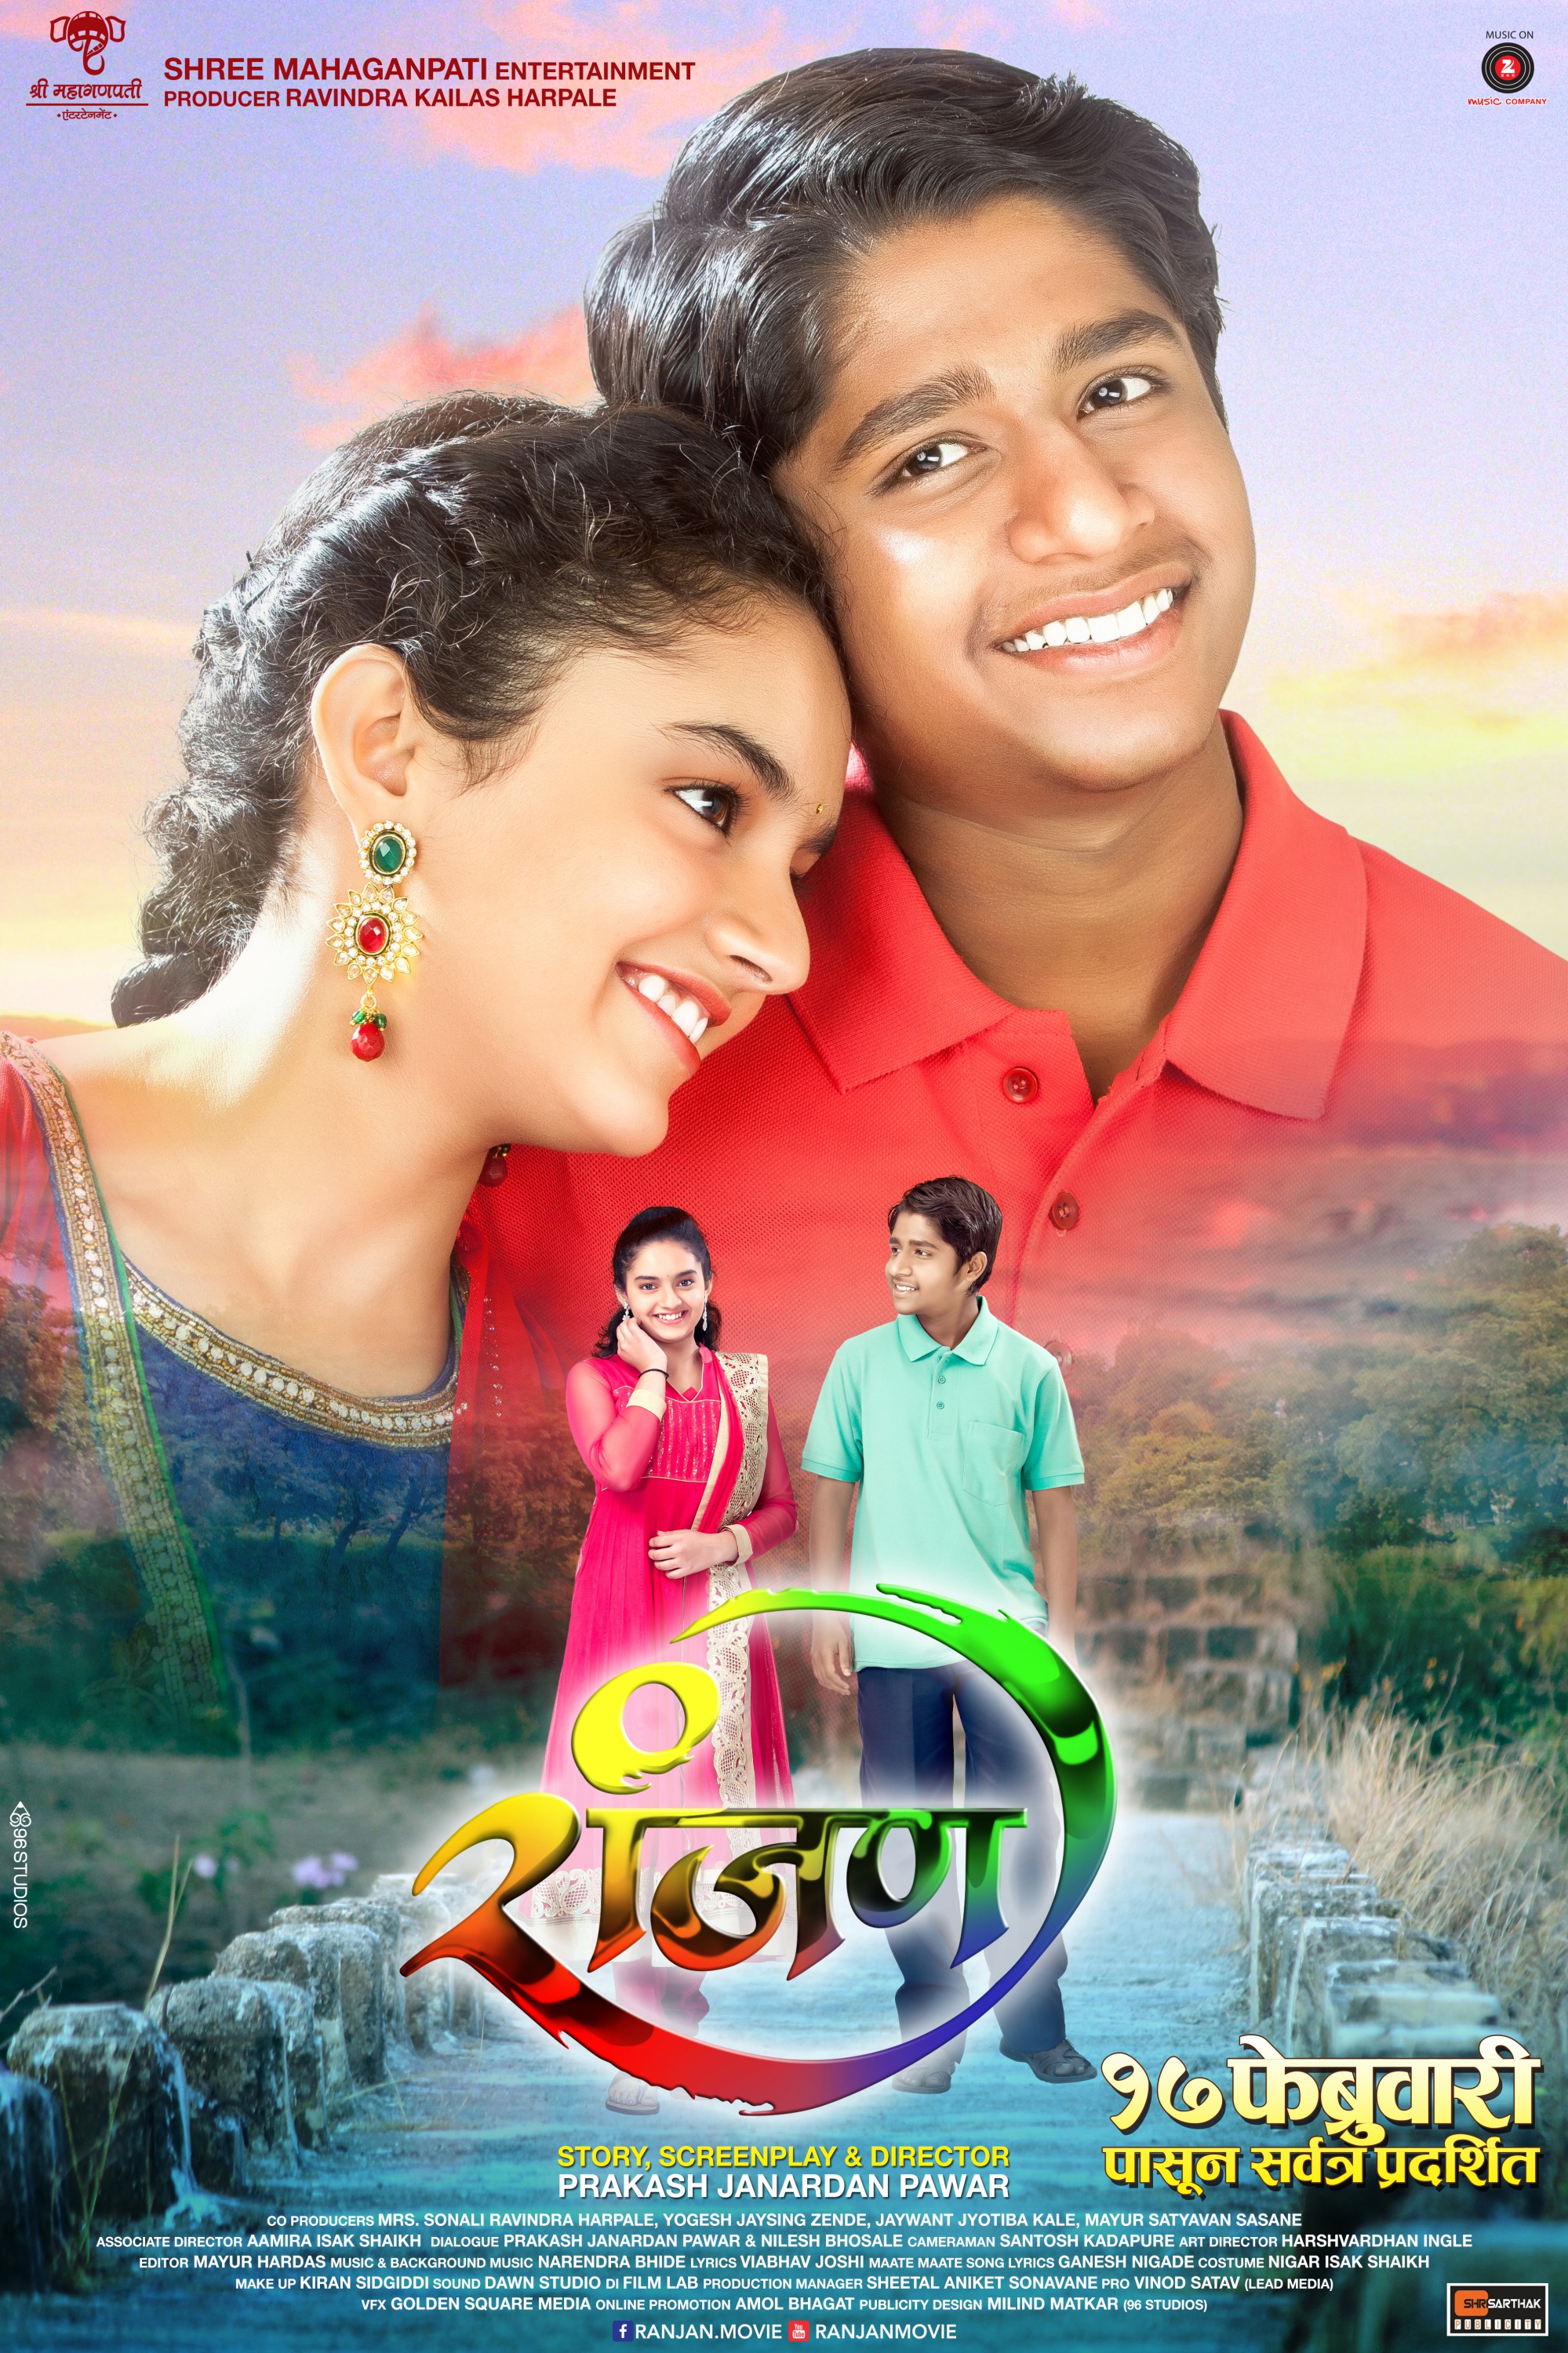 Mega Sized Movie Poster Image for Ranjan (#2 of 2)